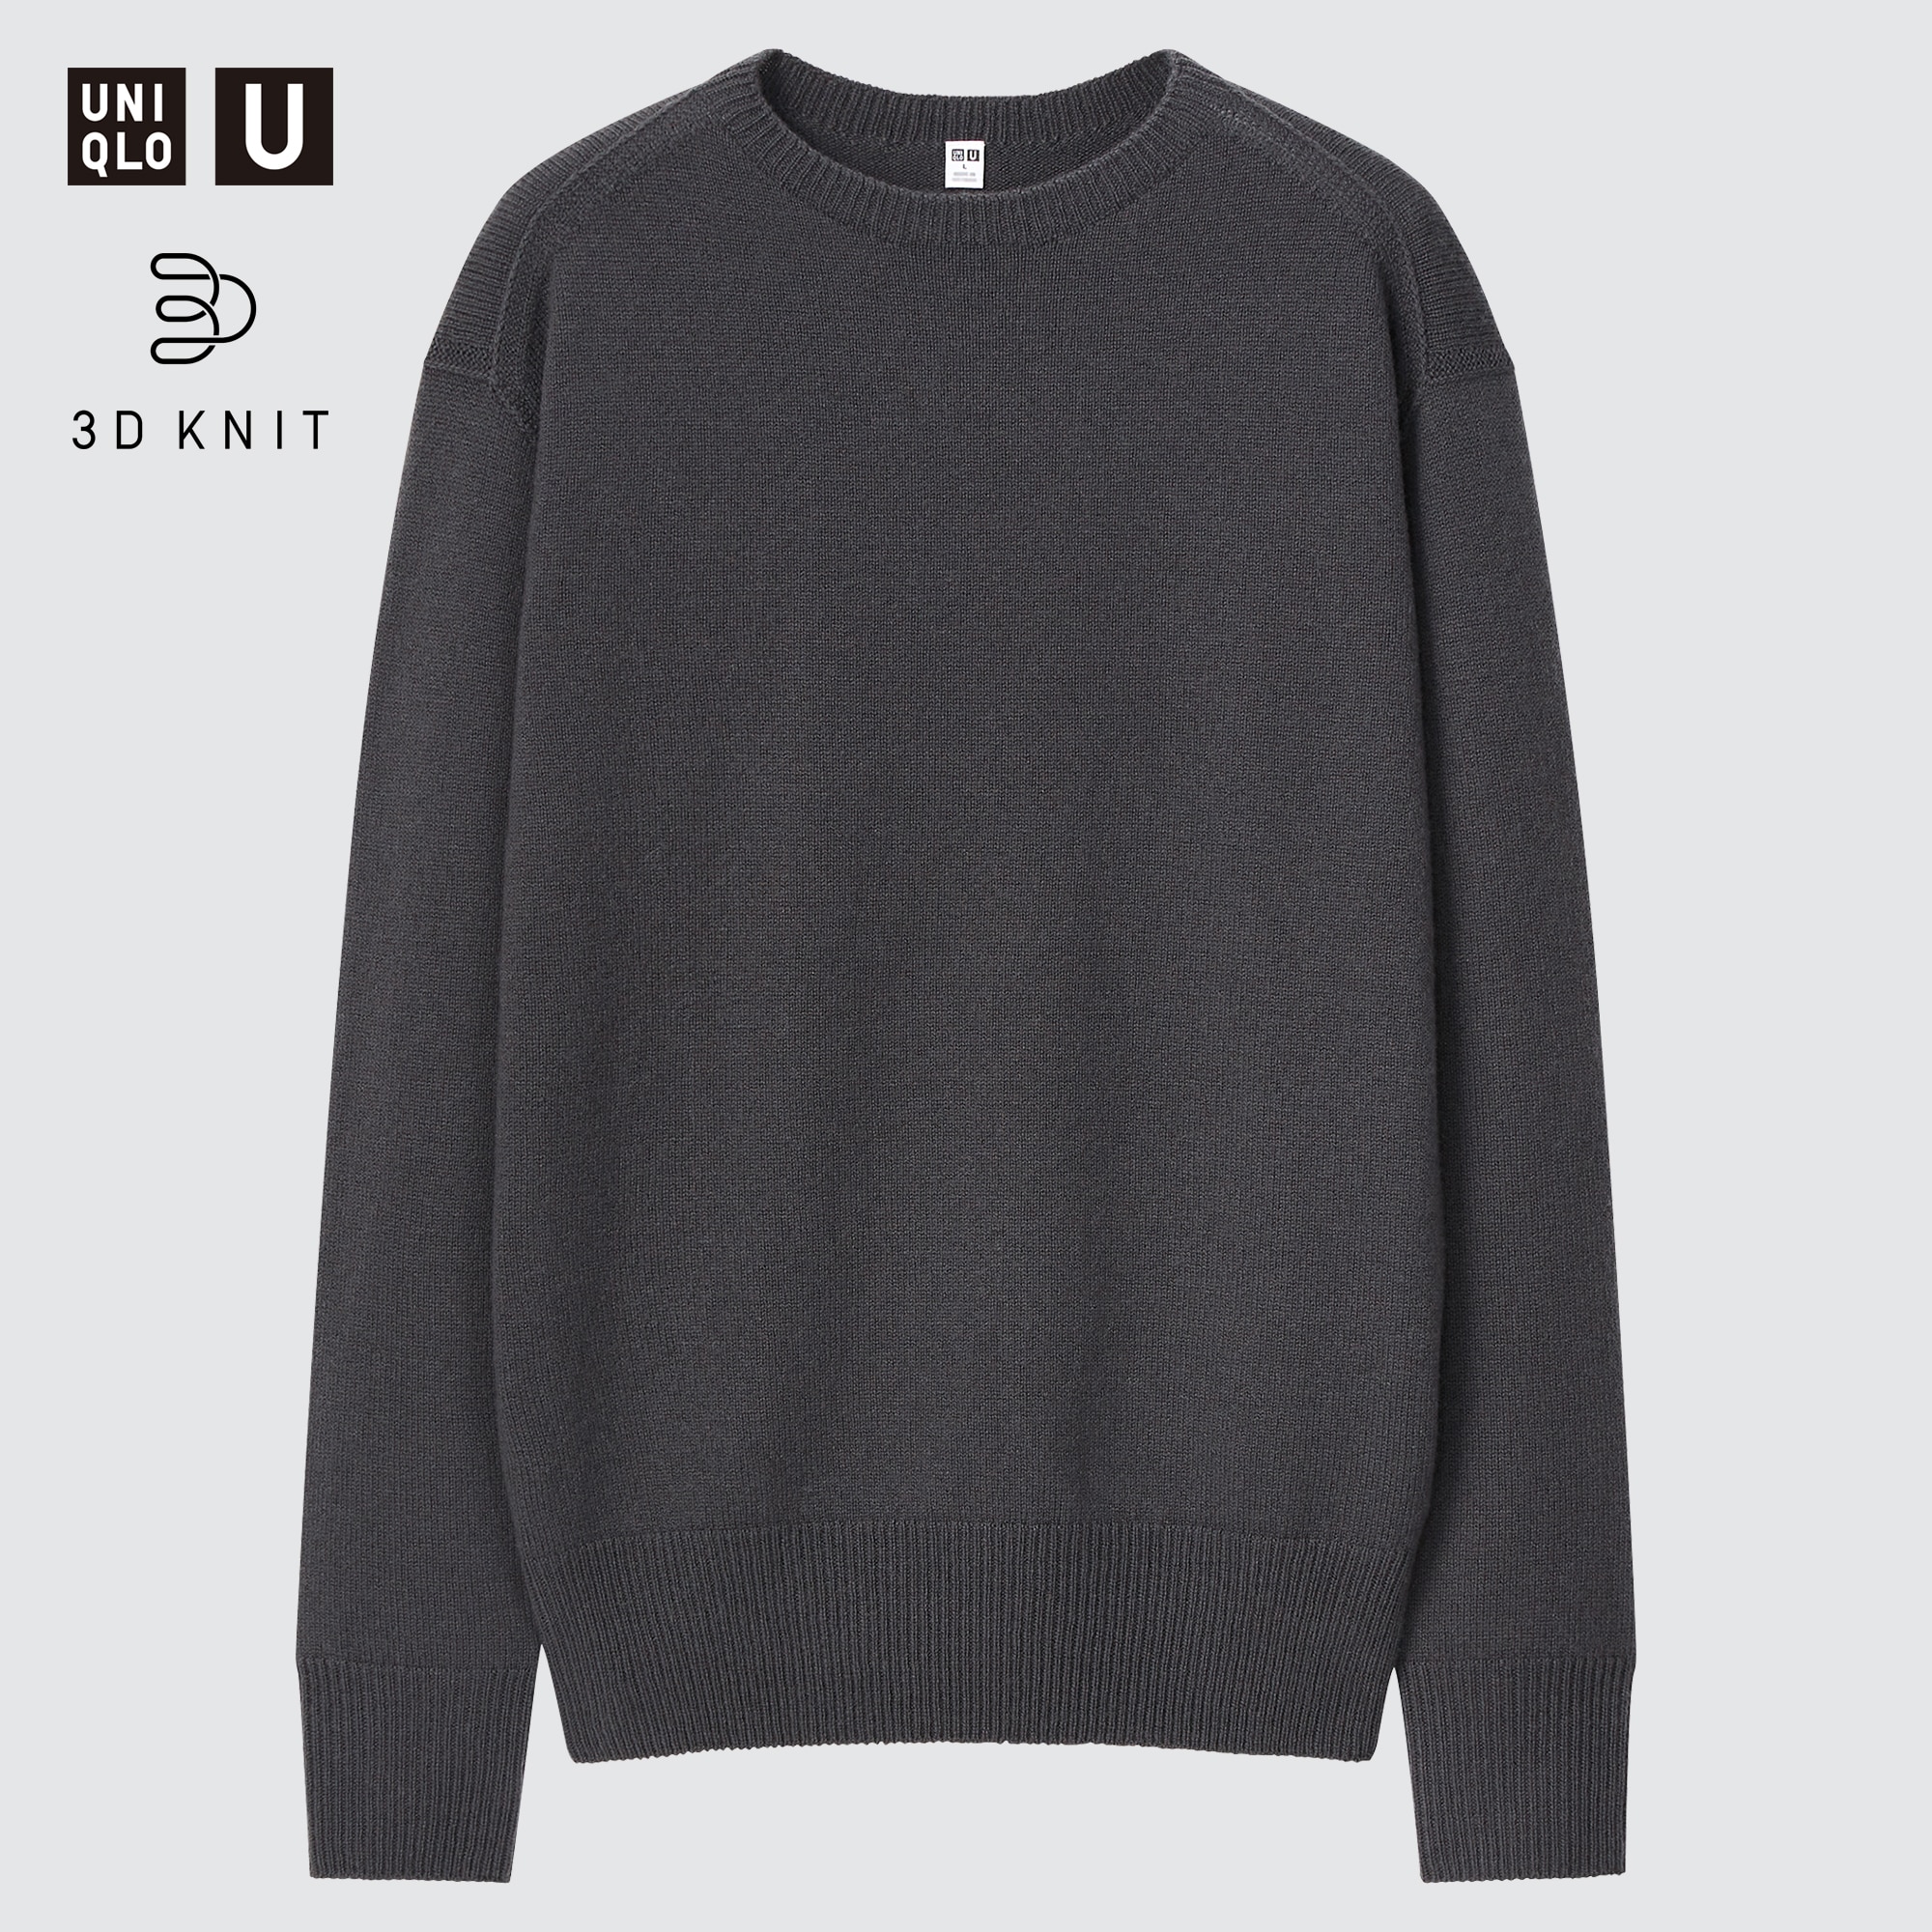 LEMAIRE x UNIQLO 039U039 Men039s Designer Milano Ribbed Crew Neck  Sweater M White NWT  eBay